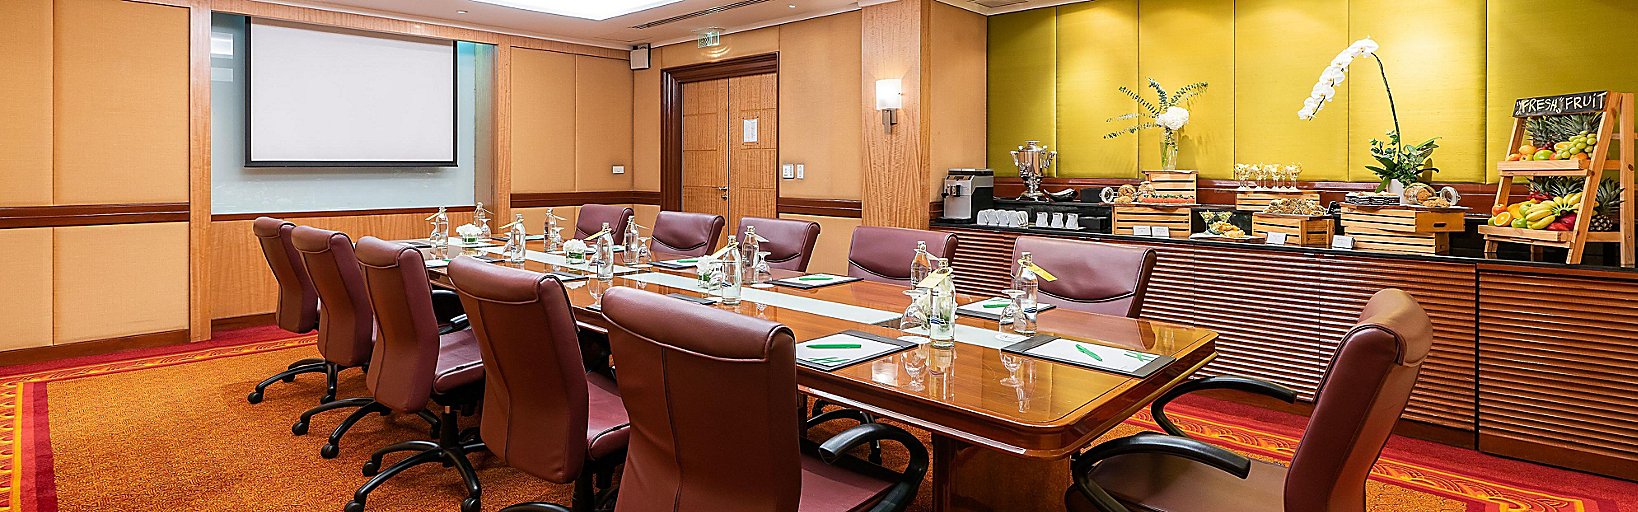 Holiday Inn Bangkok Silom Hotel Groups Meeting Rooms Available